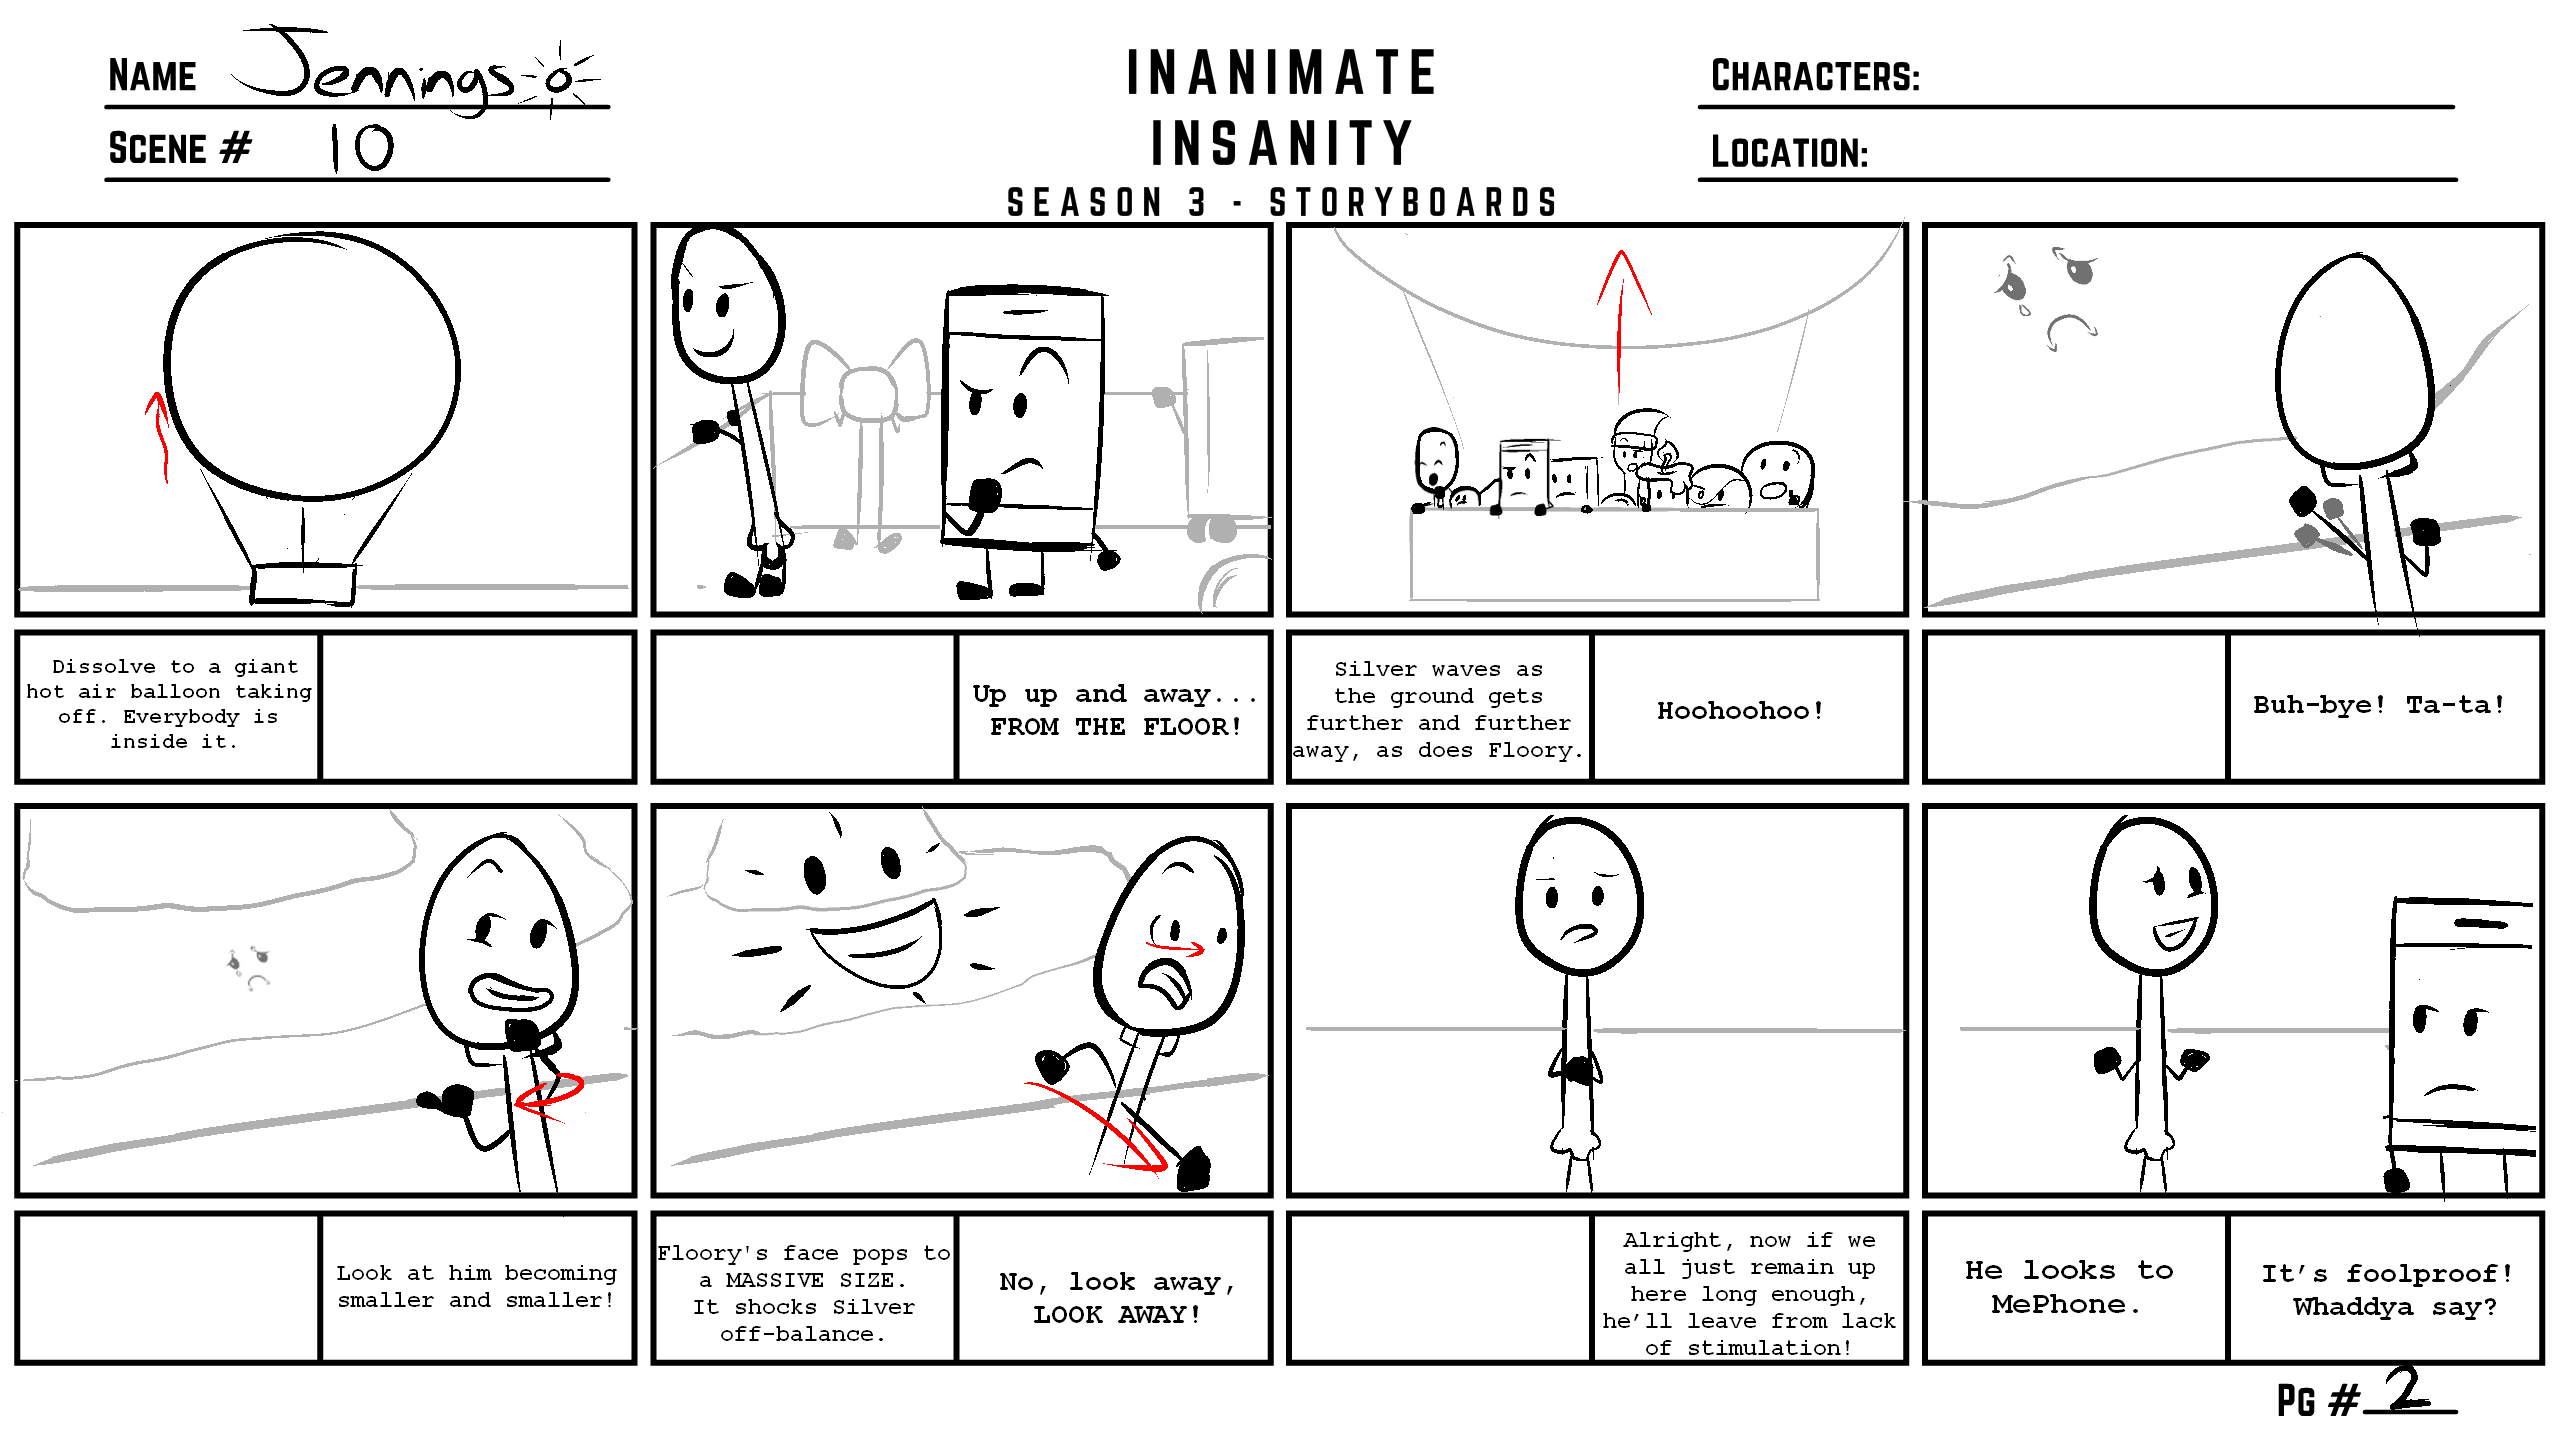 Inanimate Insanity Scene 10-2